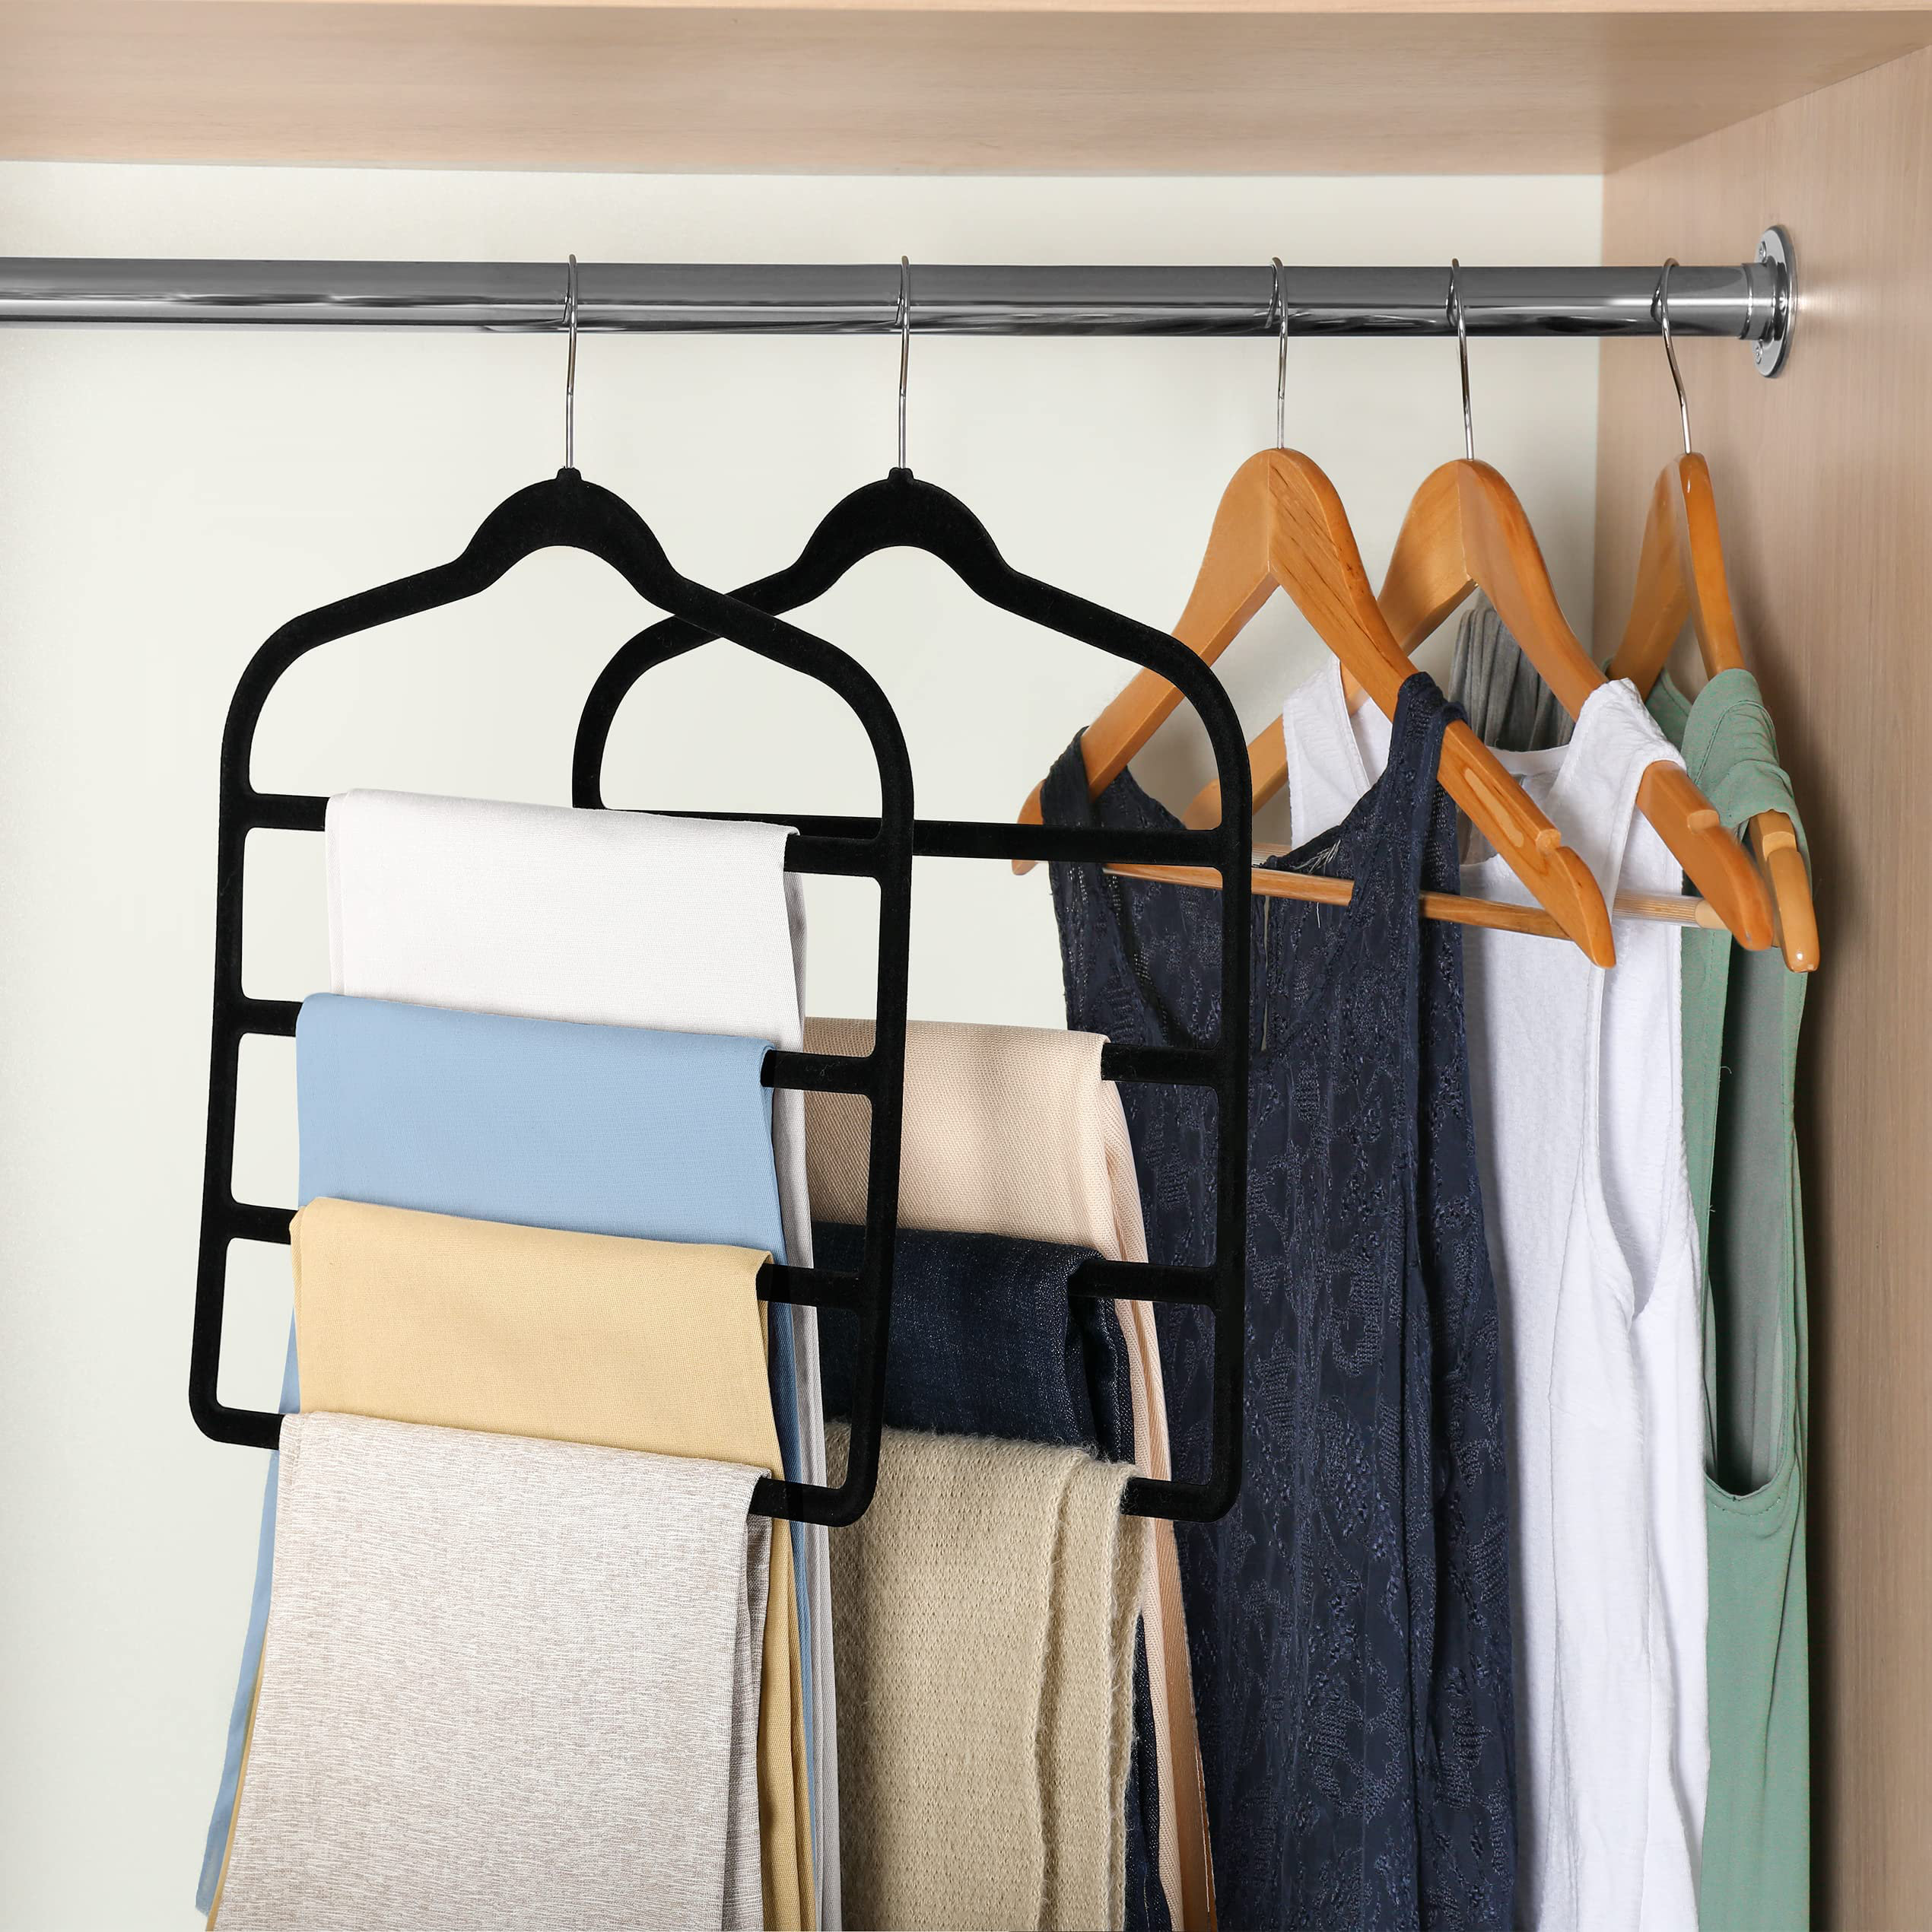 Yes, Velvet Hangers Save Space